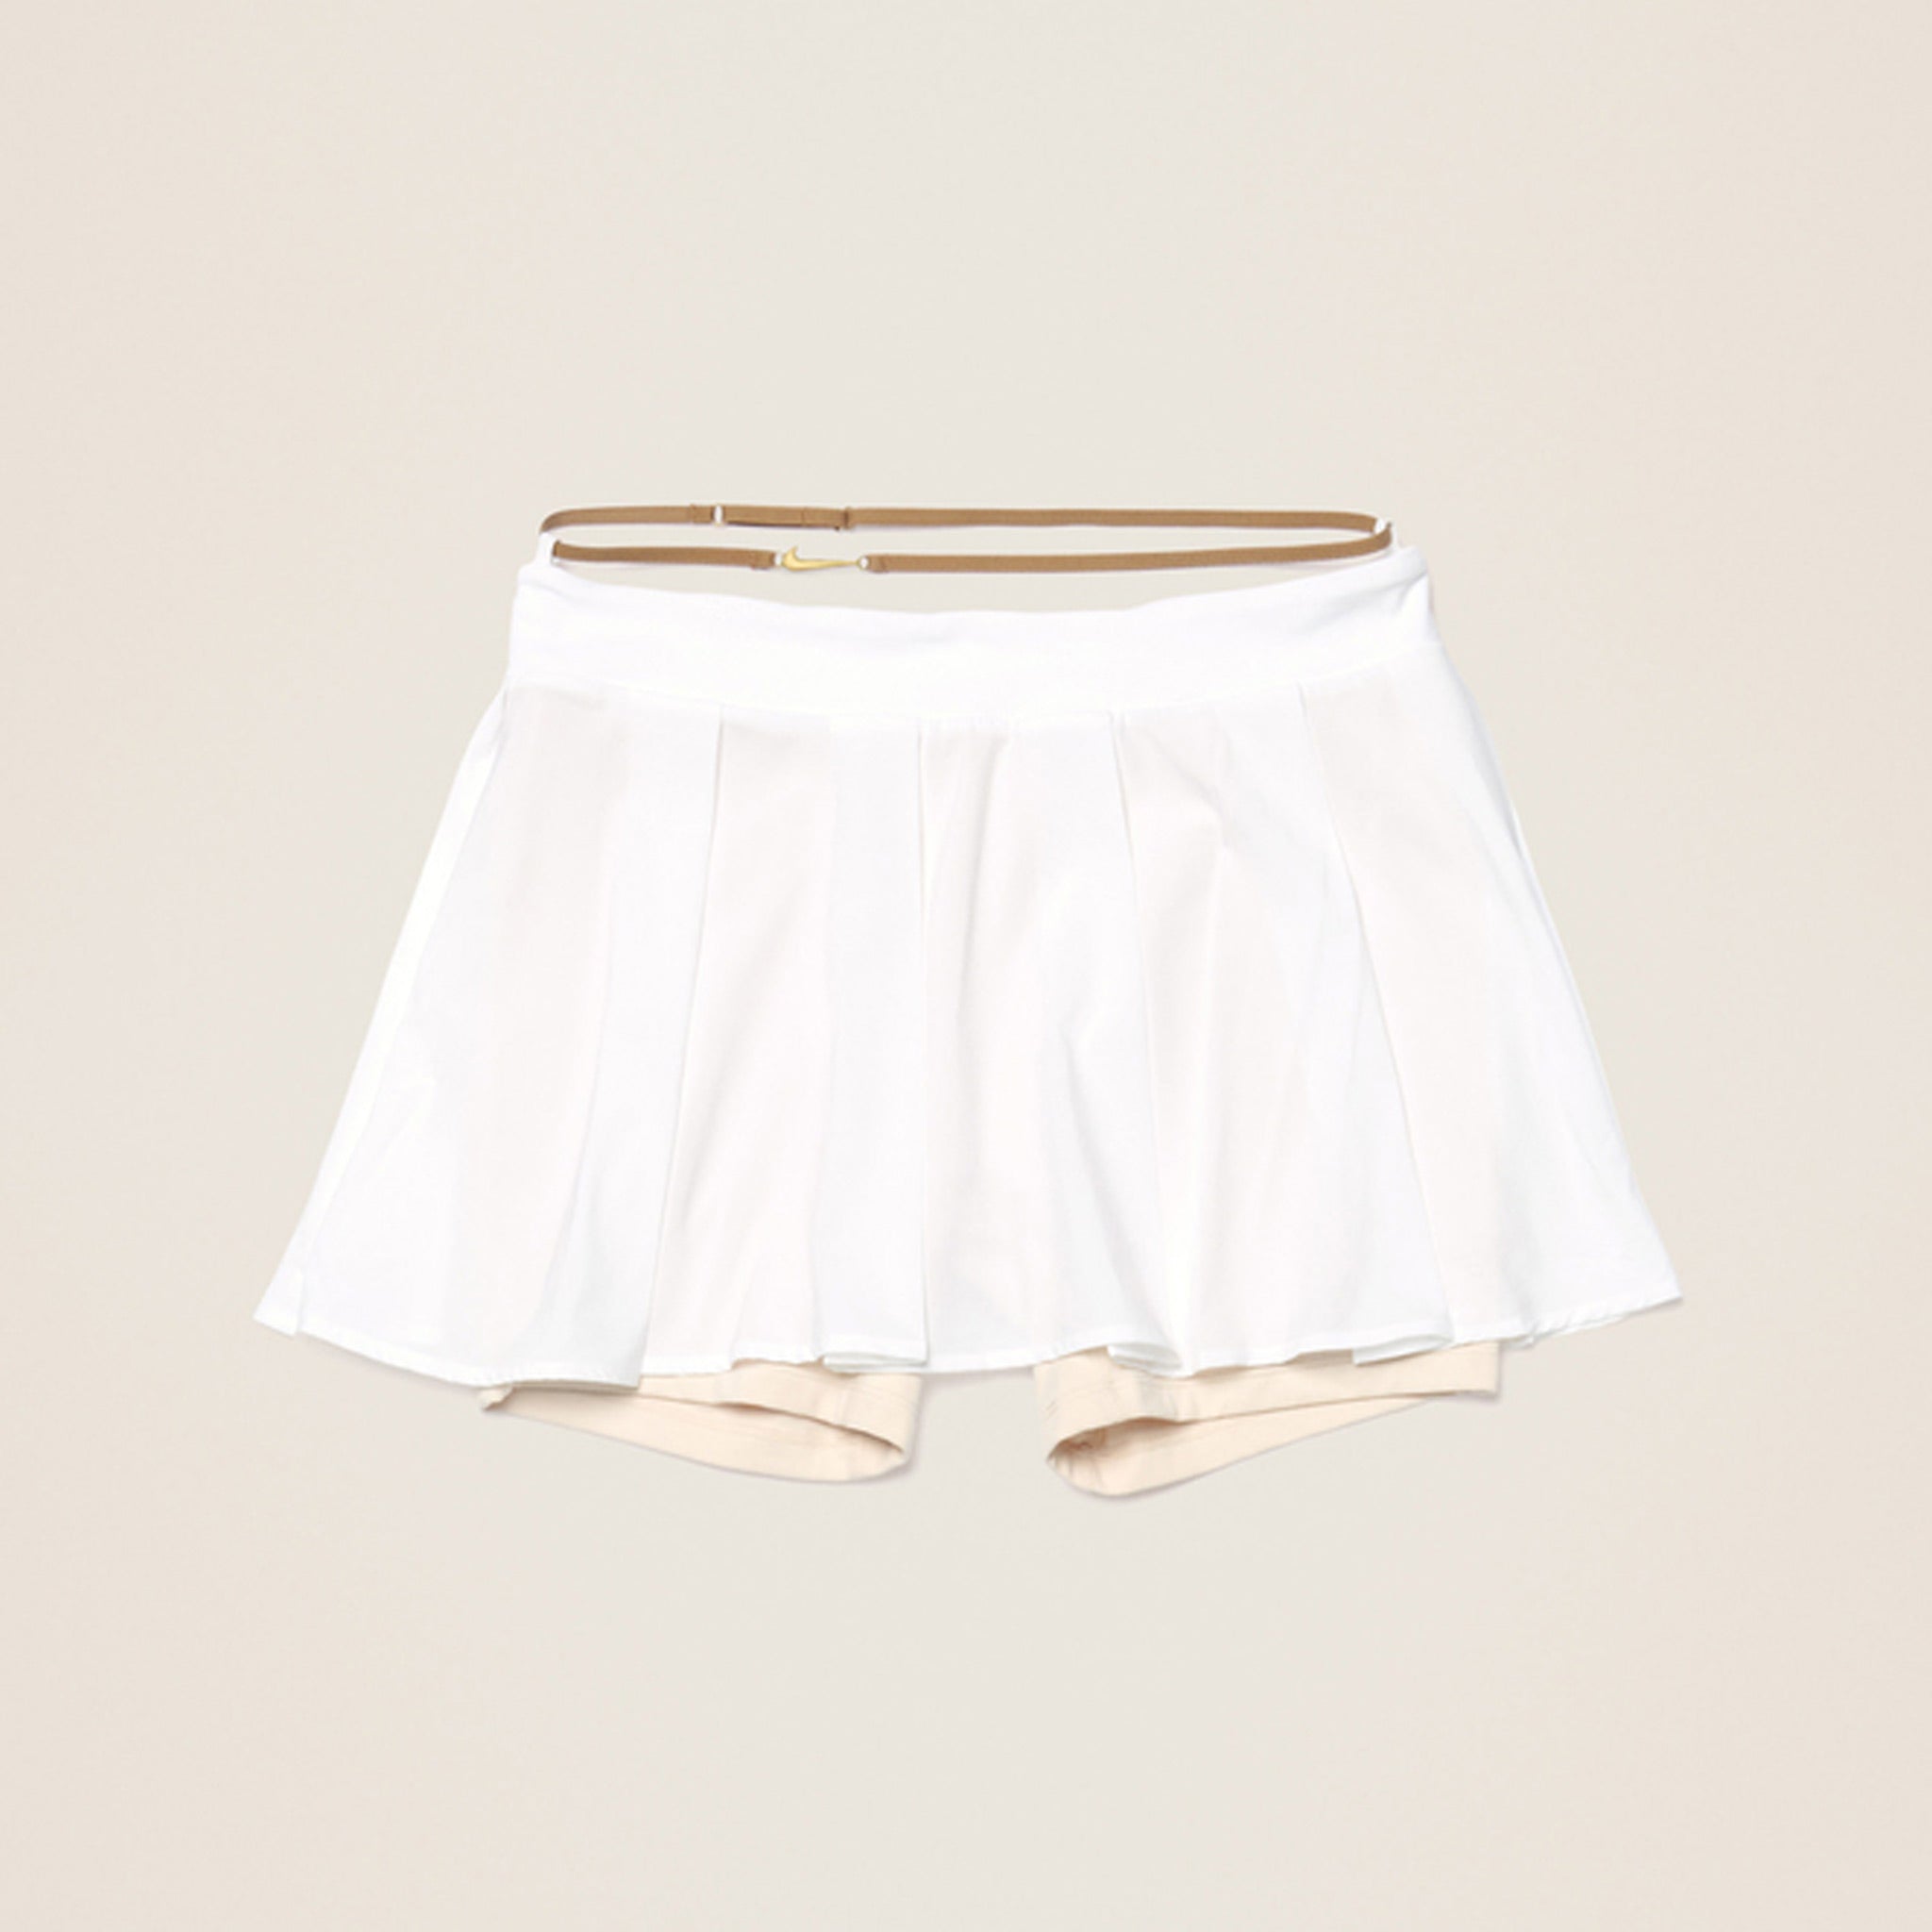 Nike x Jacquemus La Jupe Skirt / Short - Pearl White | Australia New Zealand 